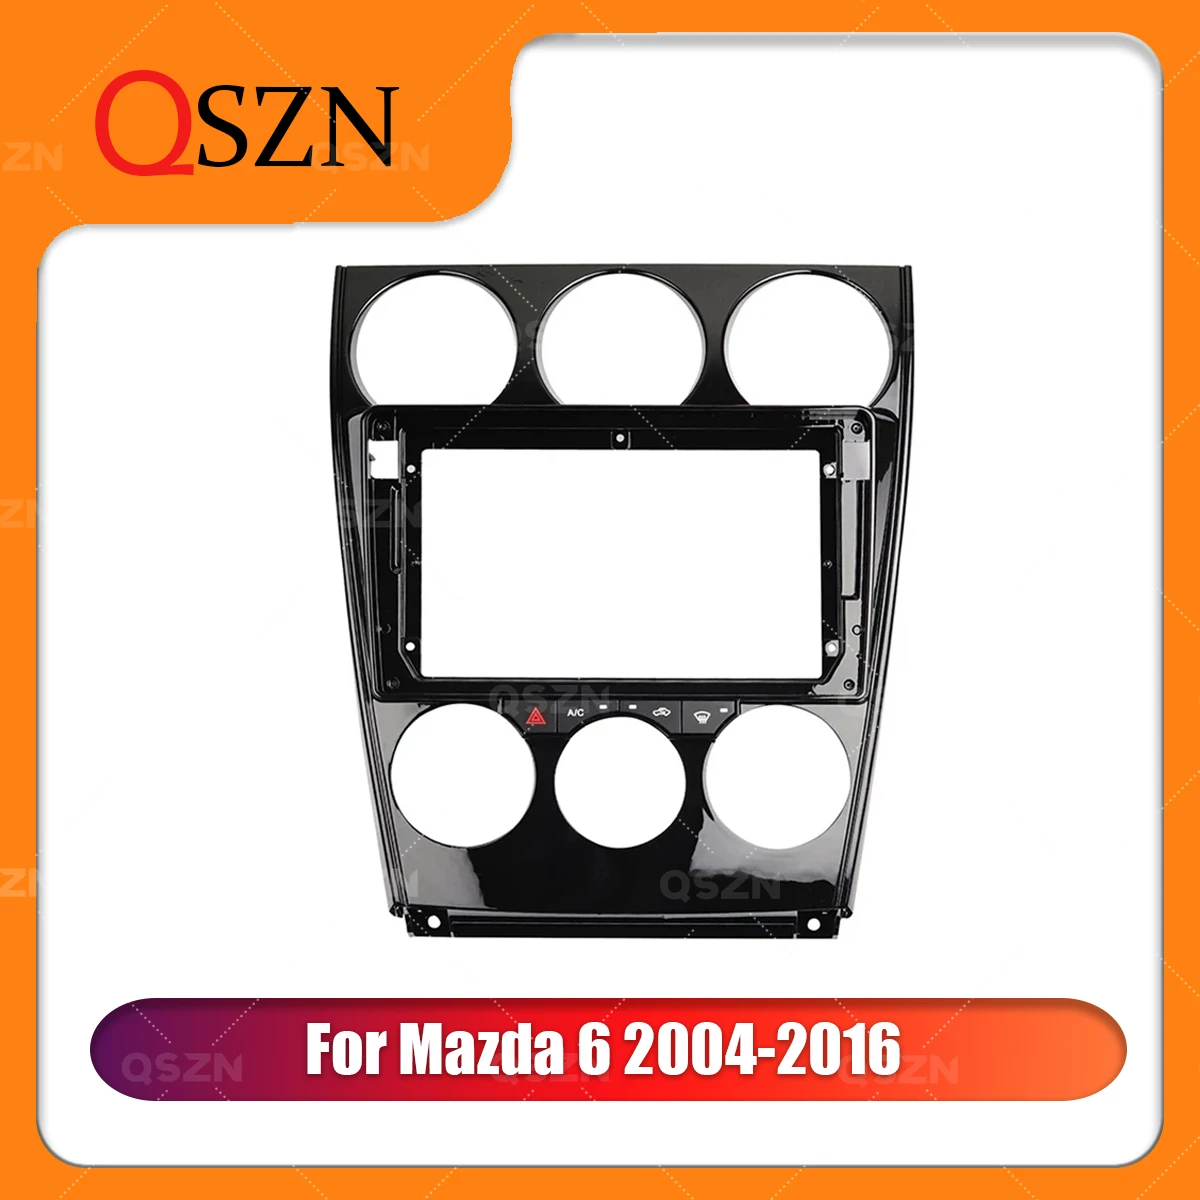 QSZN Car radio Fascias Panel For Mazda 6 2004-2015 9 inch Frame Audio Installation Dash Fitting Panel Kit Big Screen 2 Din